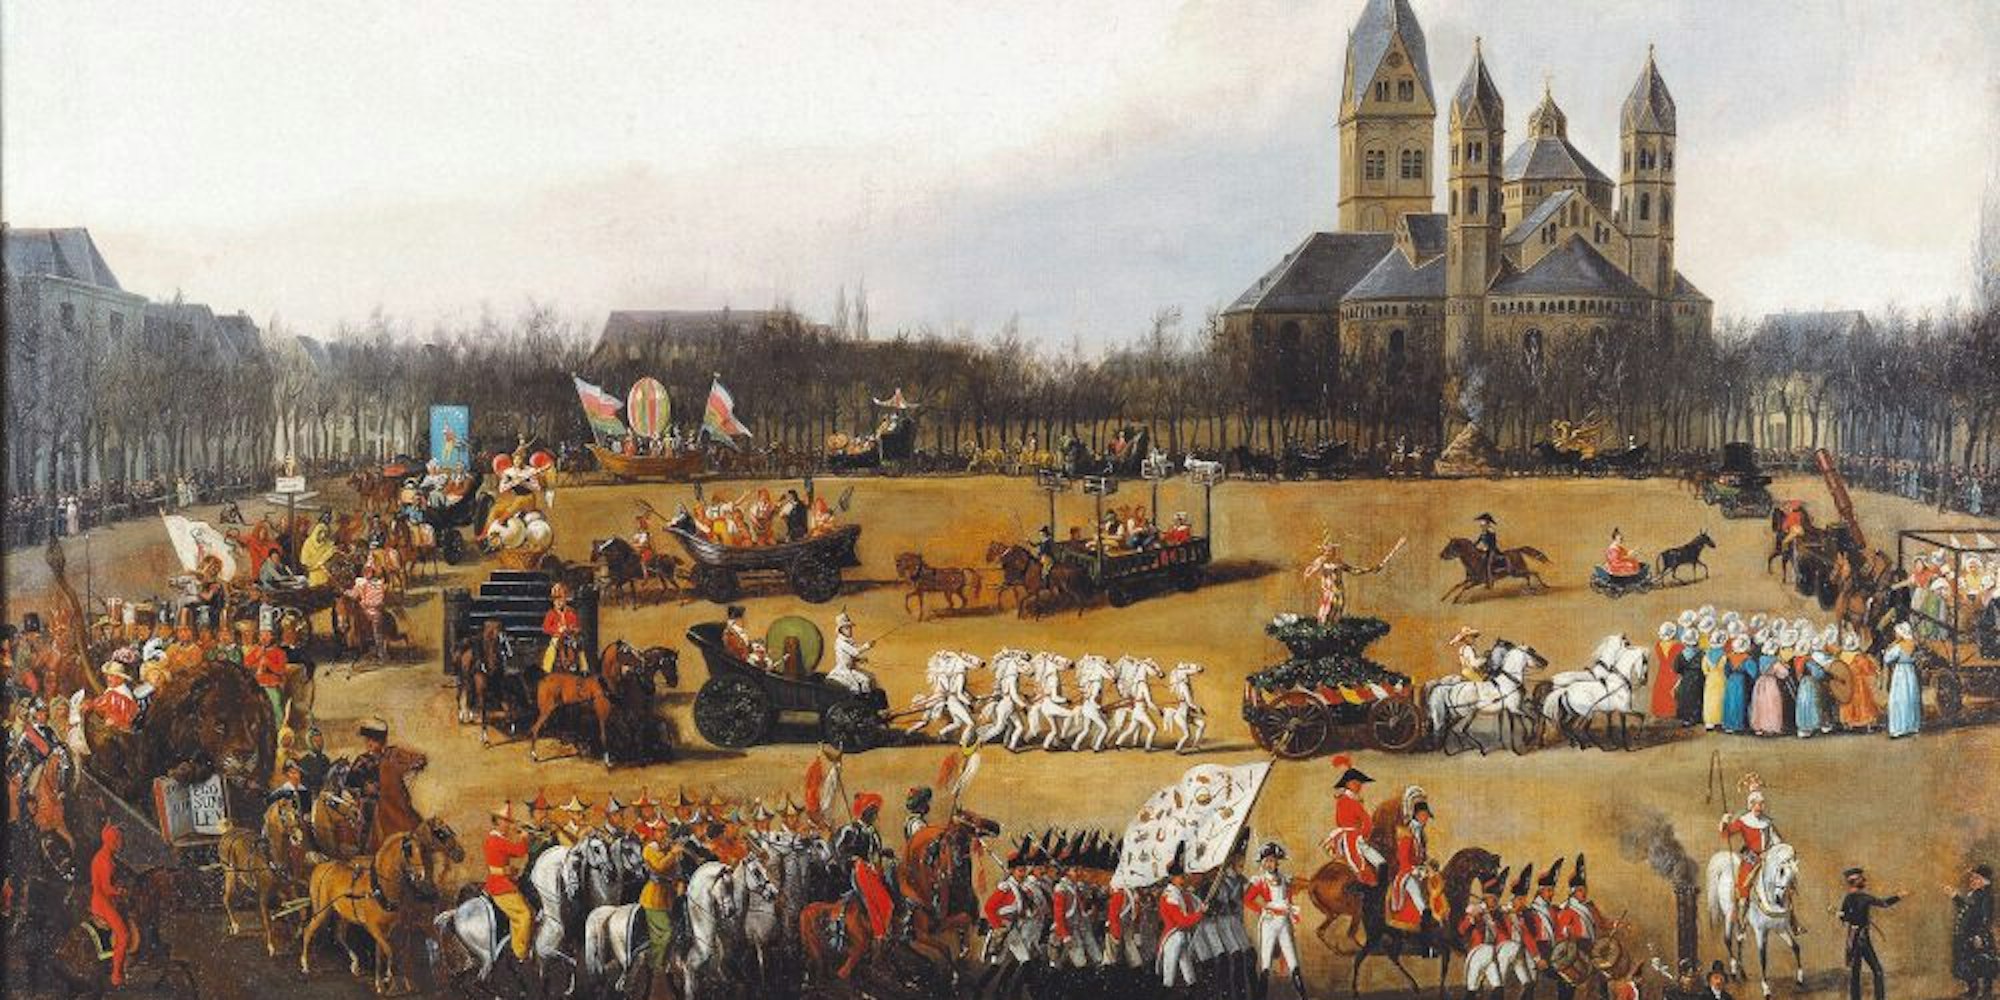 Held Carneval: Simon Meister malte den Rosenmontagszug auf dem Neumarkt 1836.